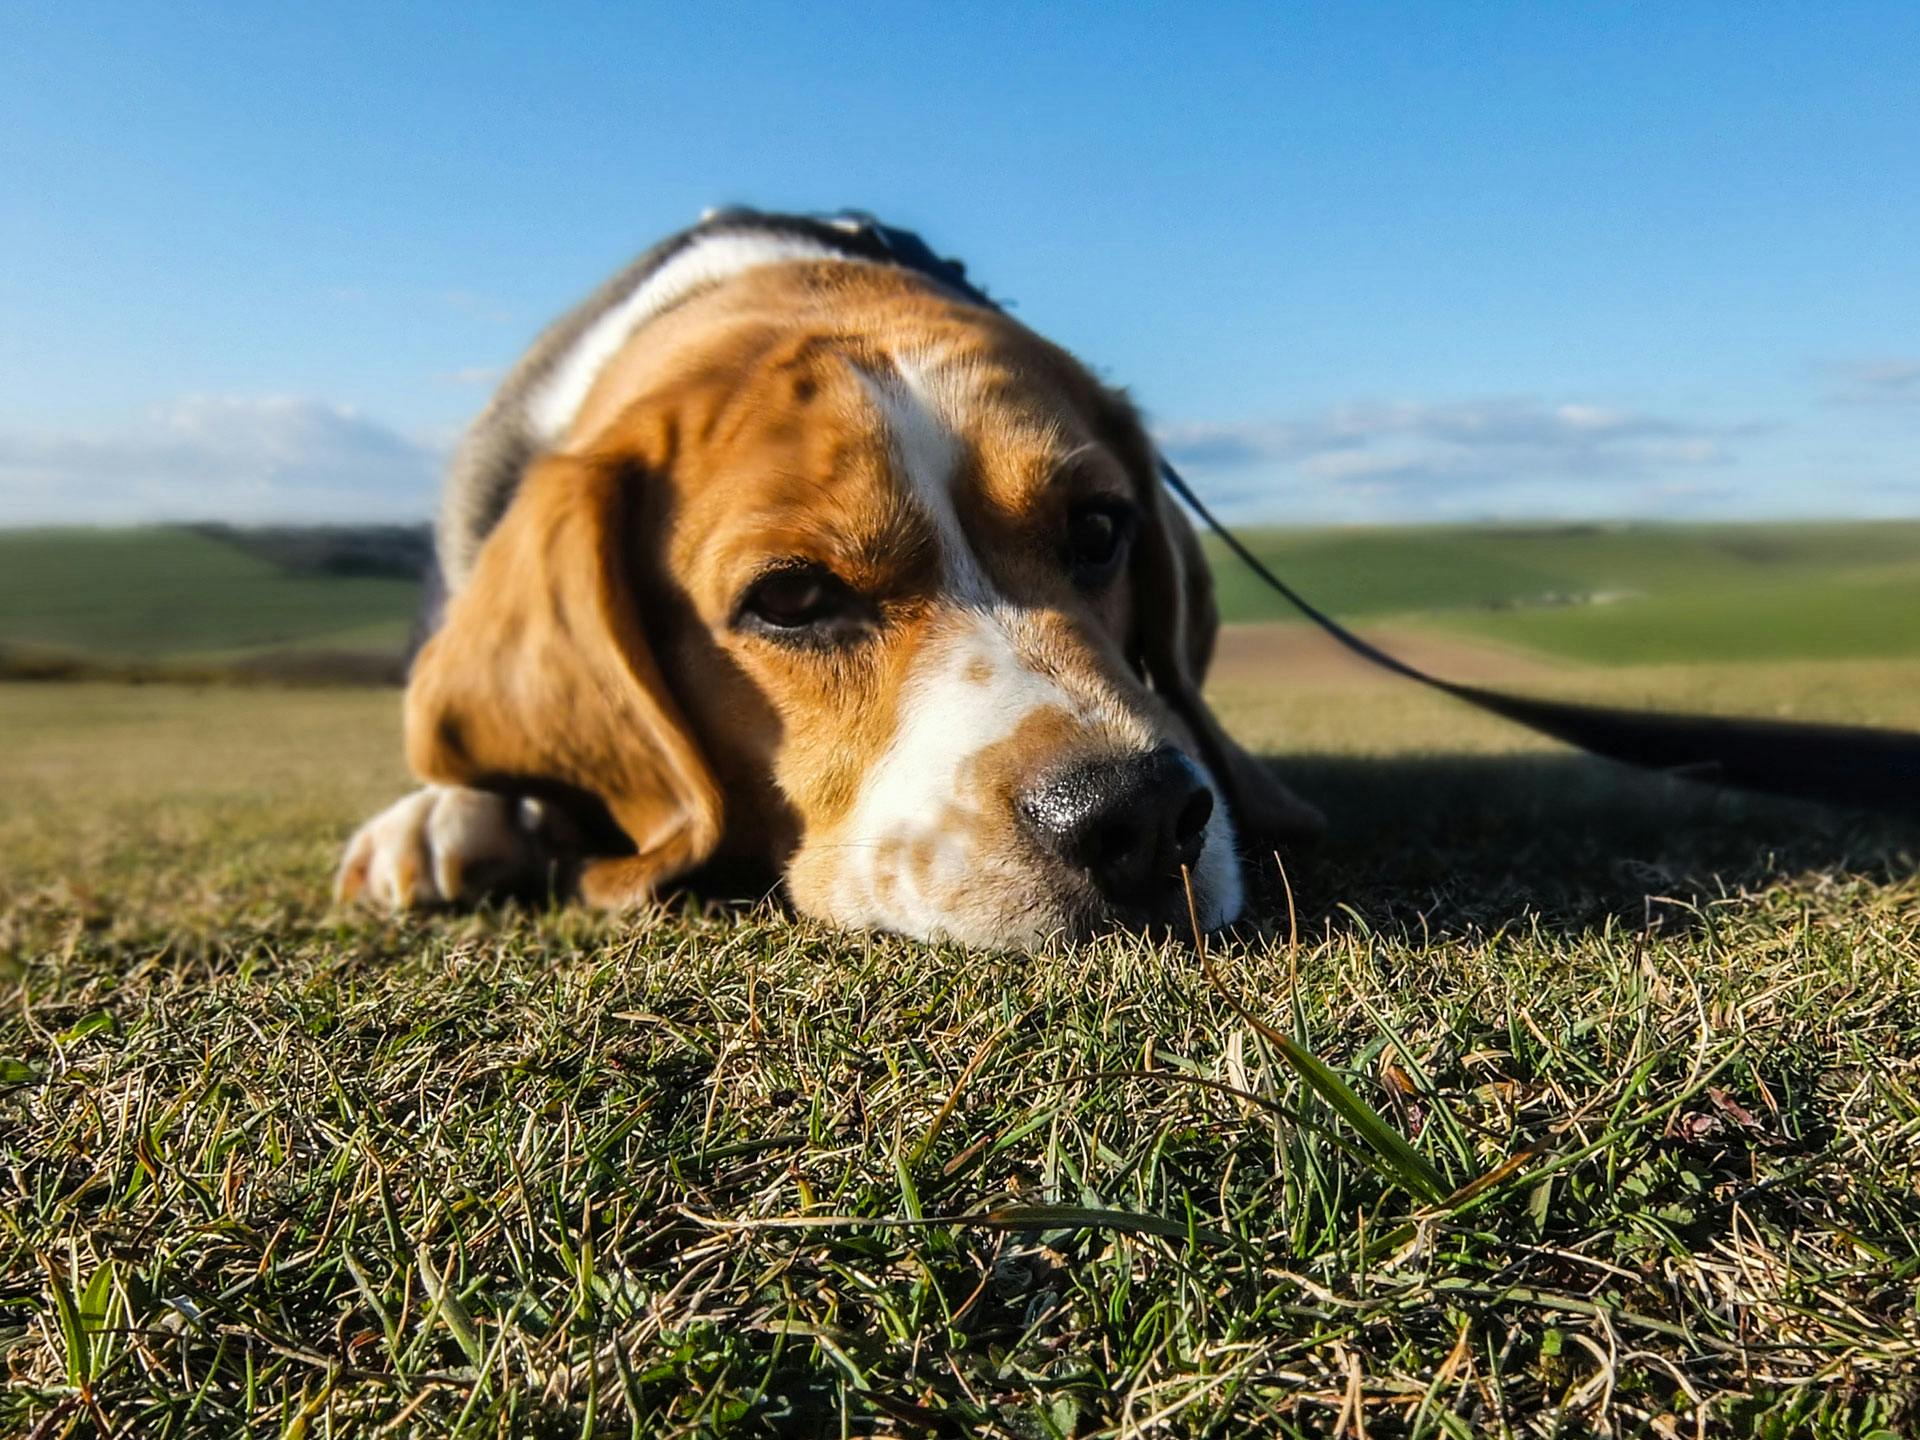 Dog Beagle: The Merry Hound